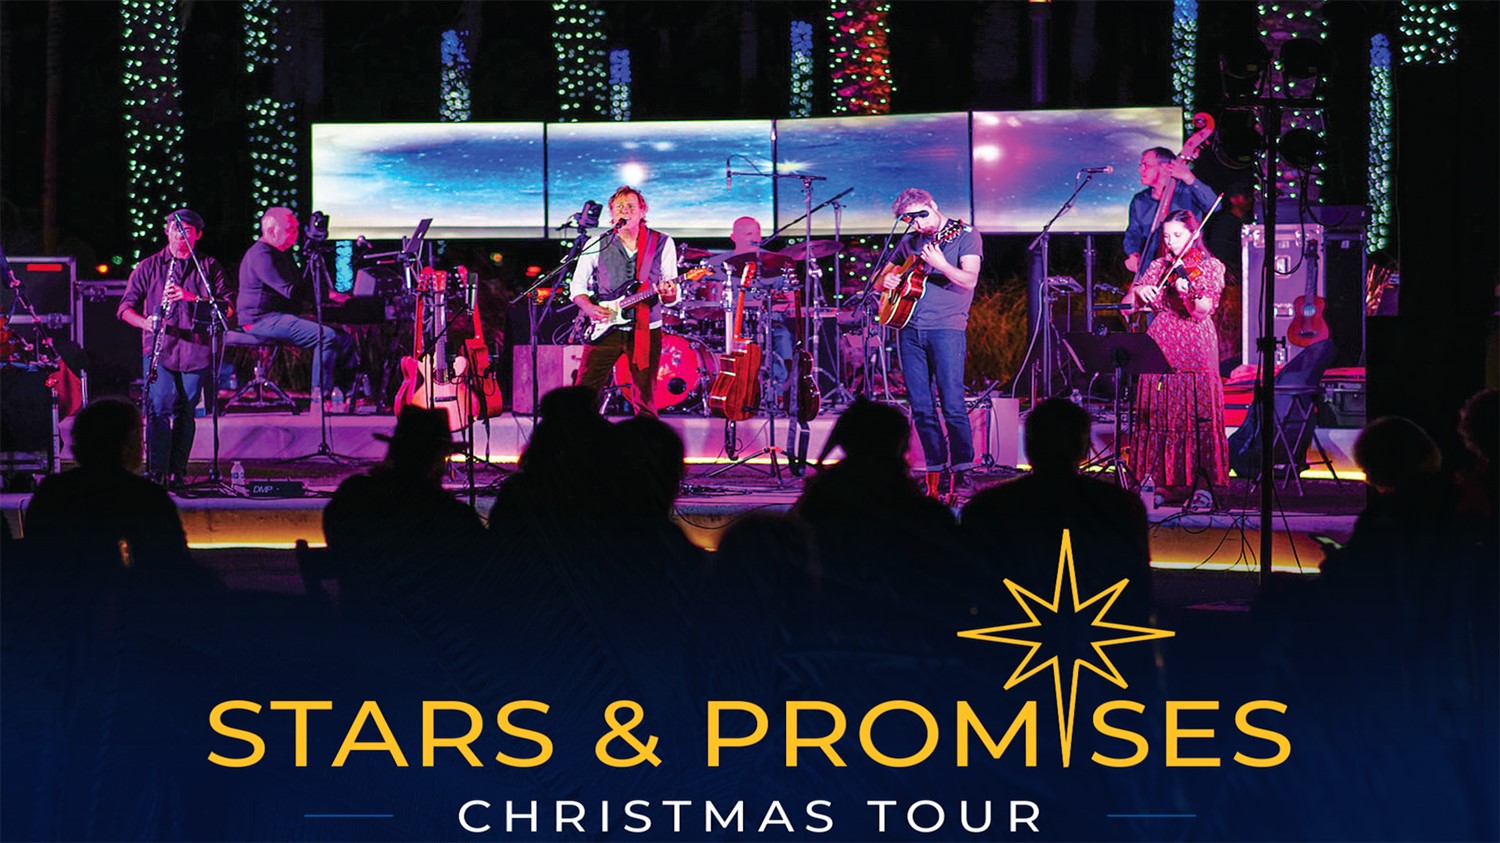 Stars & Promises Christmas Tour, featuring Peter Mayer  on dic. 06, 19:00@FFX Theatre - Elegir asientoCompra entradas y obtén información enFamily Fun Xperience tickets.ffxshow.org